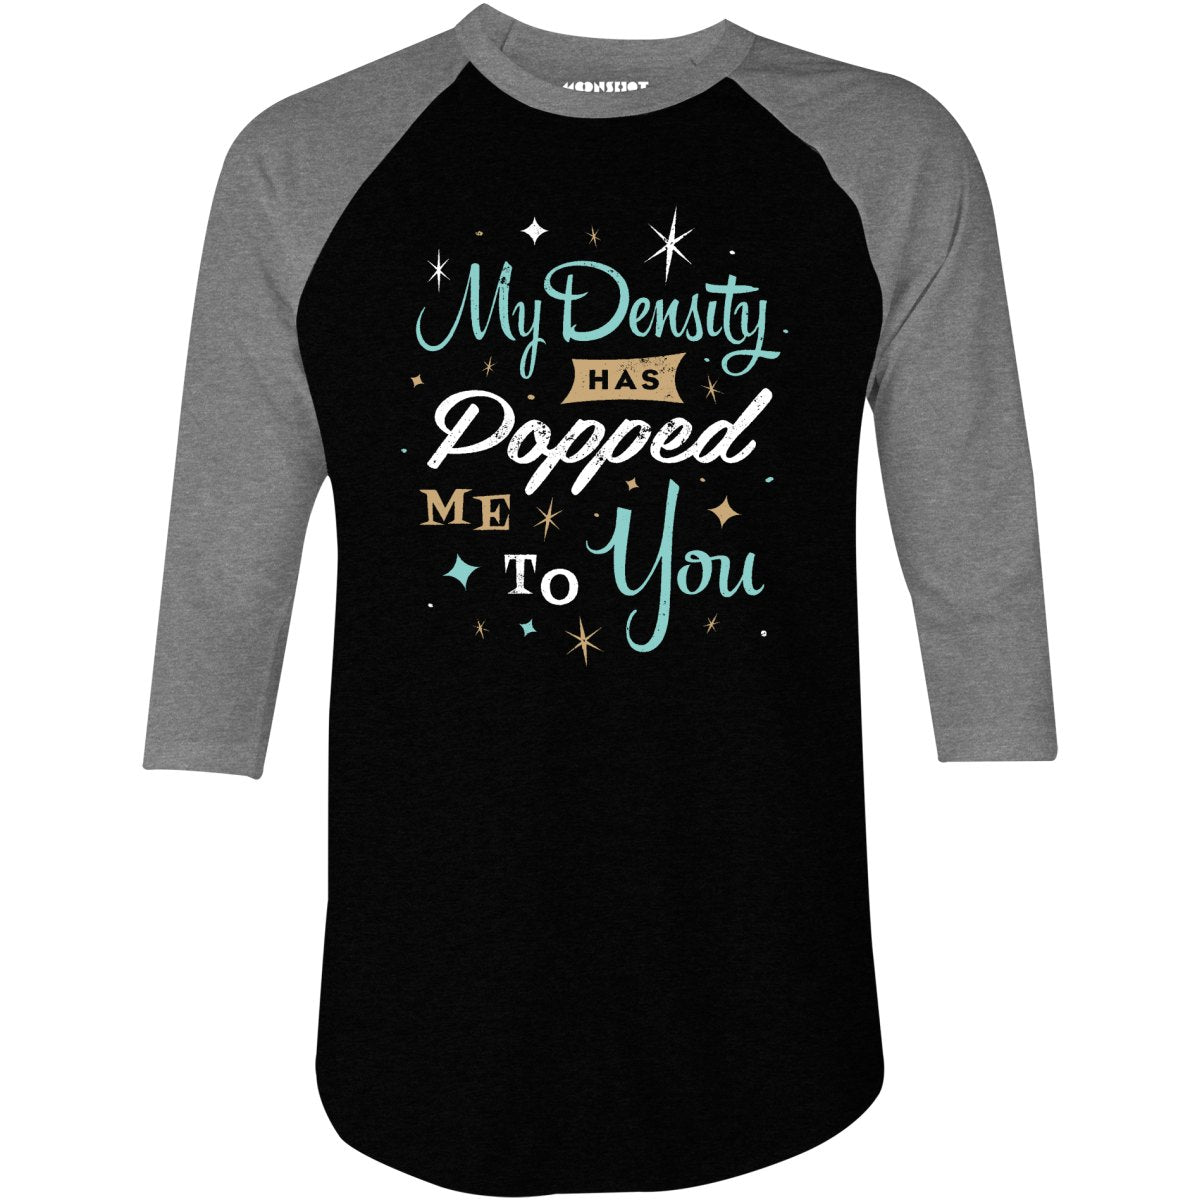 My Density Has Popped Me To You - 3/4 Sleeve Raglan T-Shirt